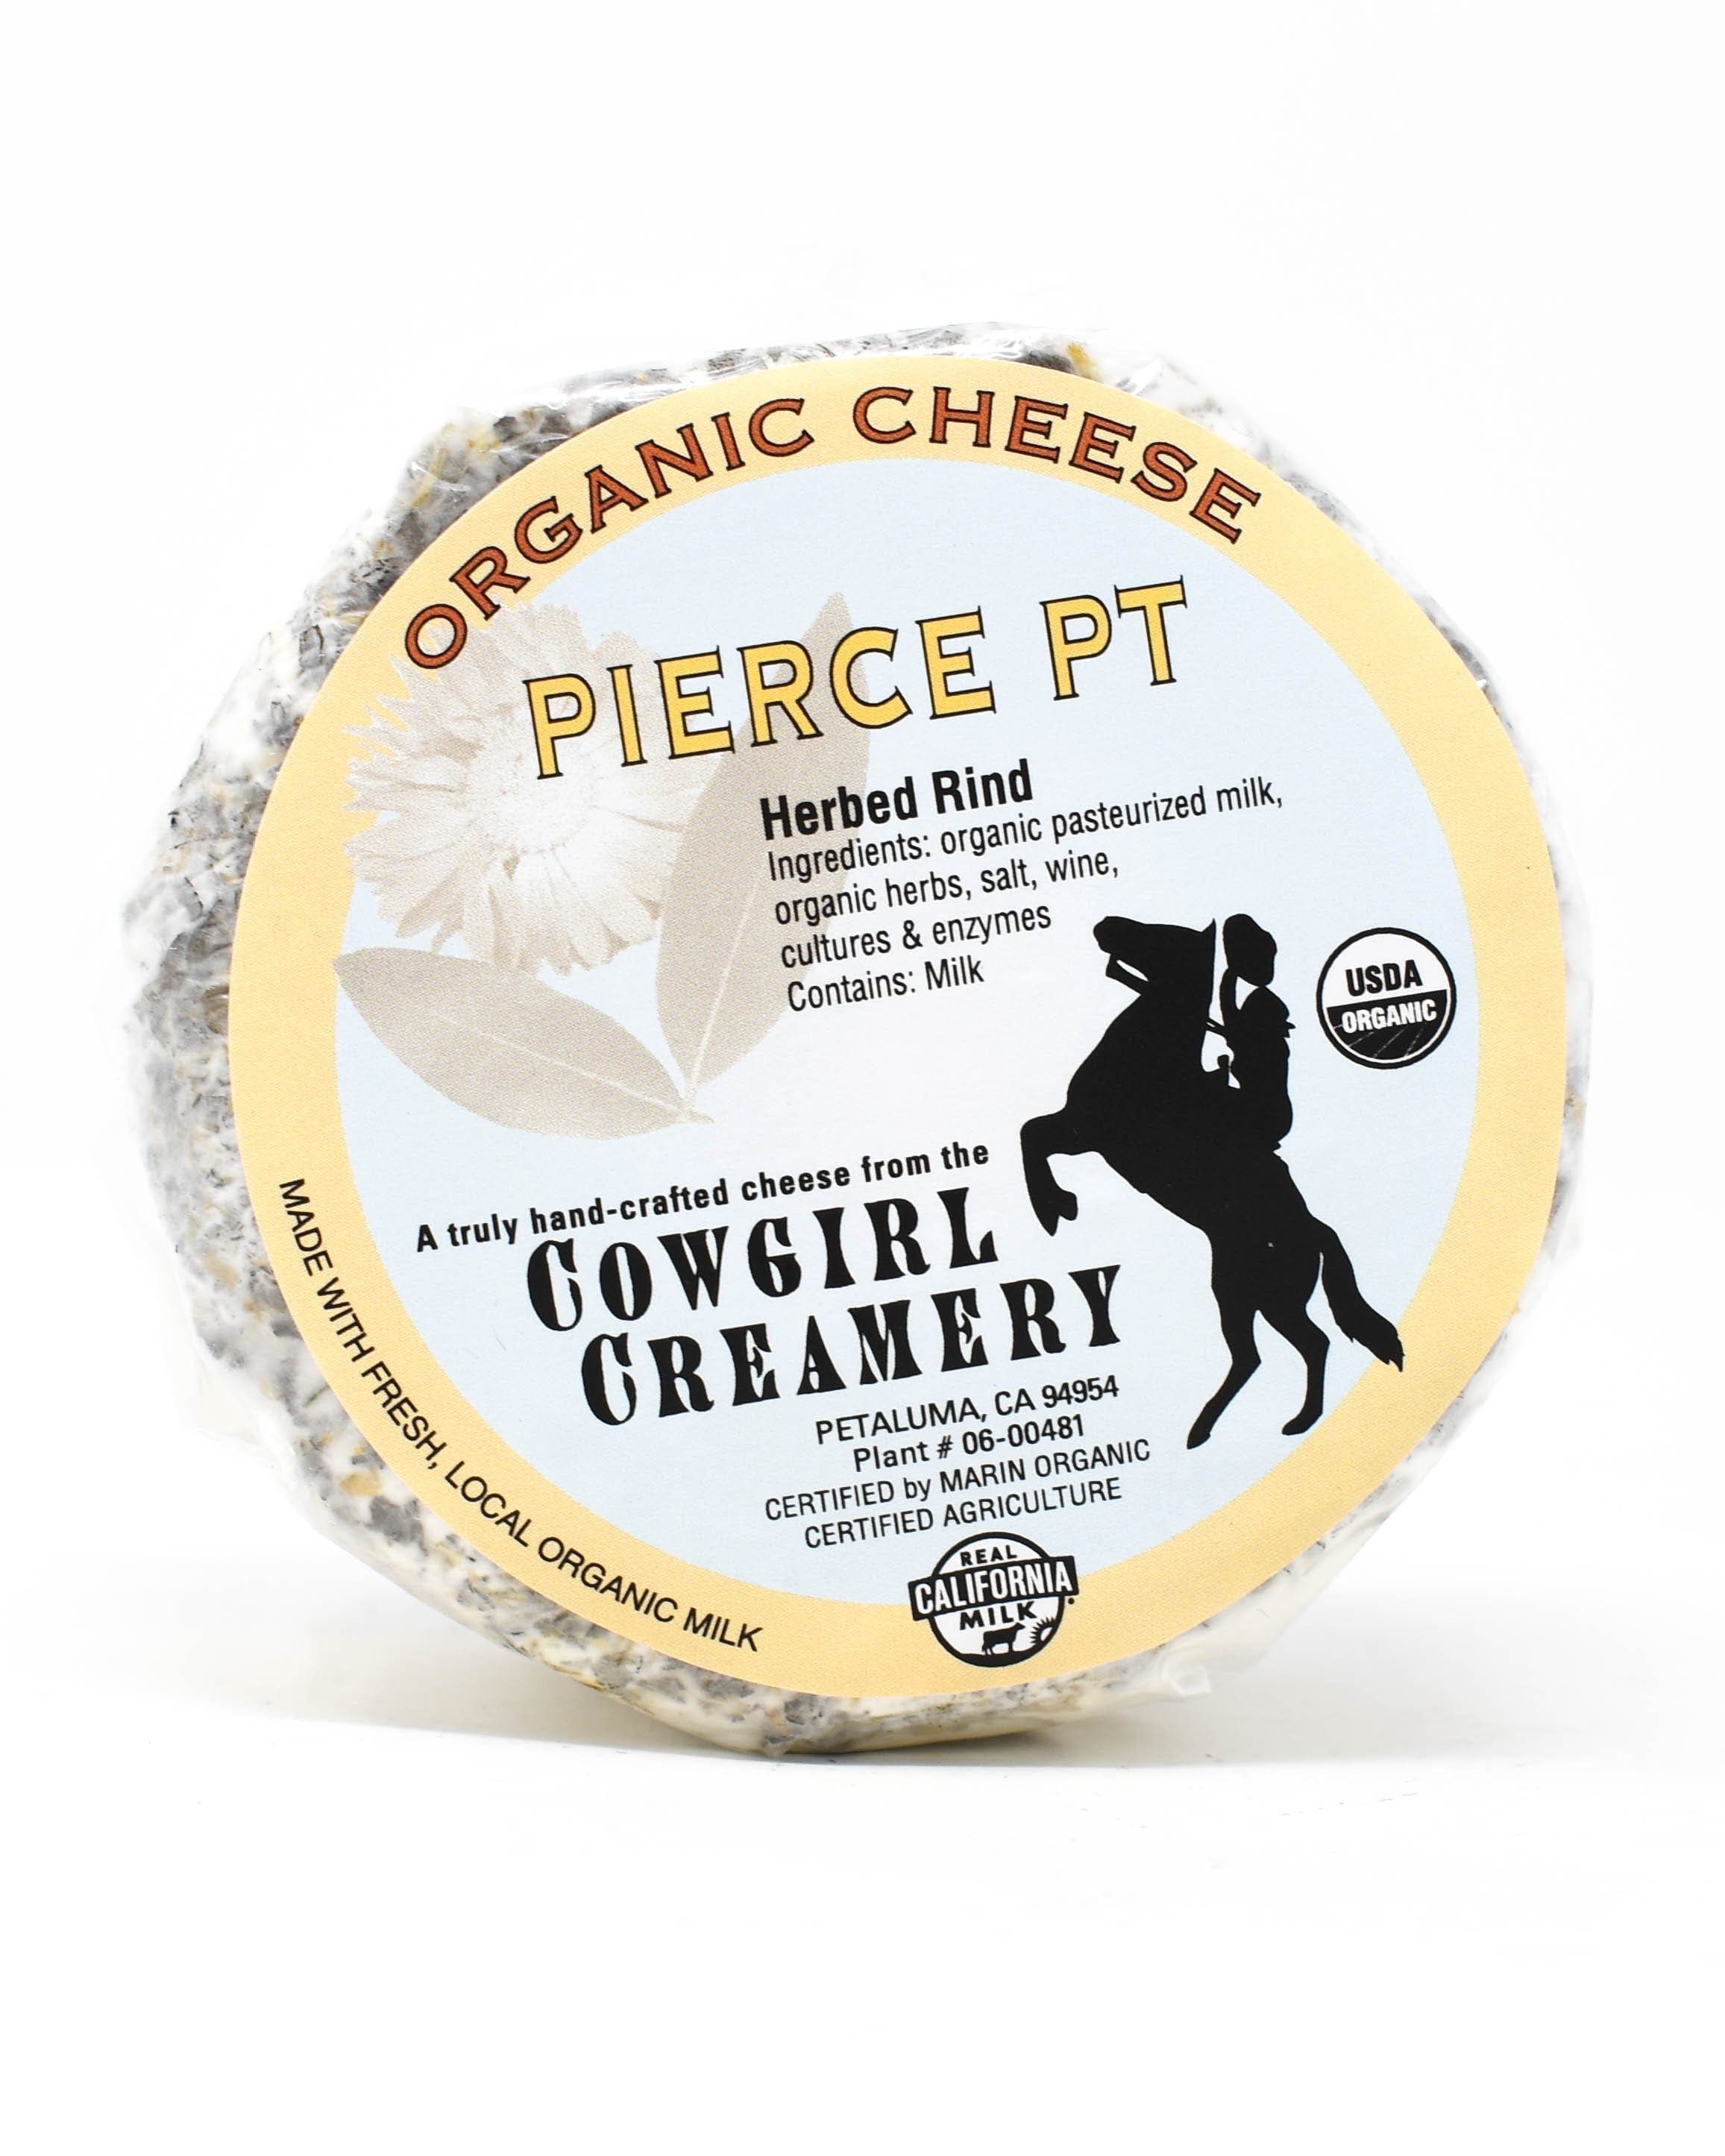 Cowgirl Creamery, Pierce Pt